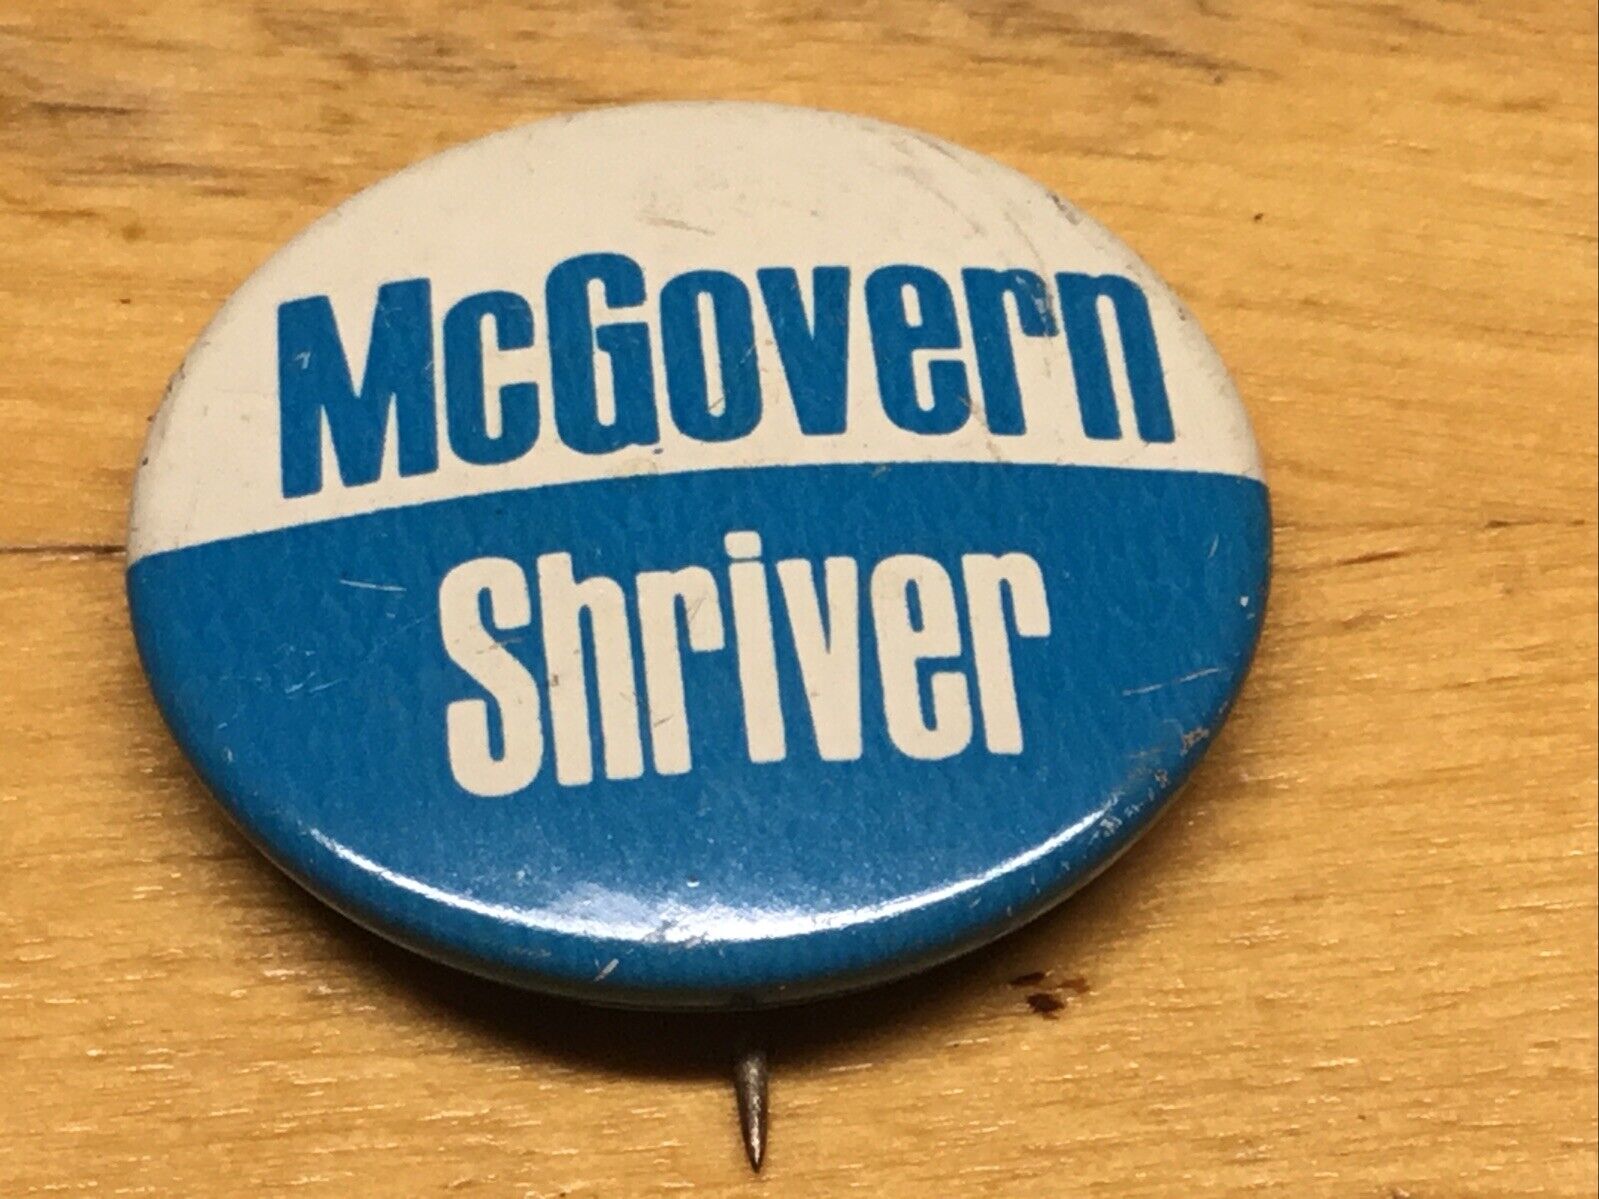 McGovern Shriver President Campaign Pin Button 1972 Vintage Political Pinback